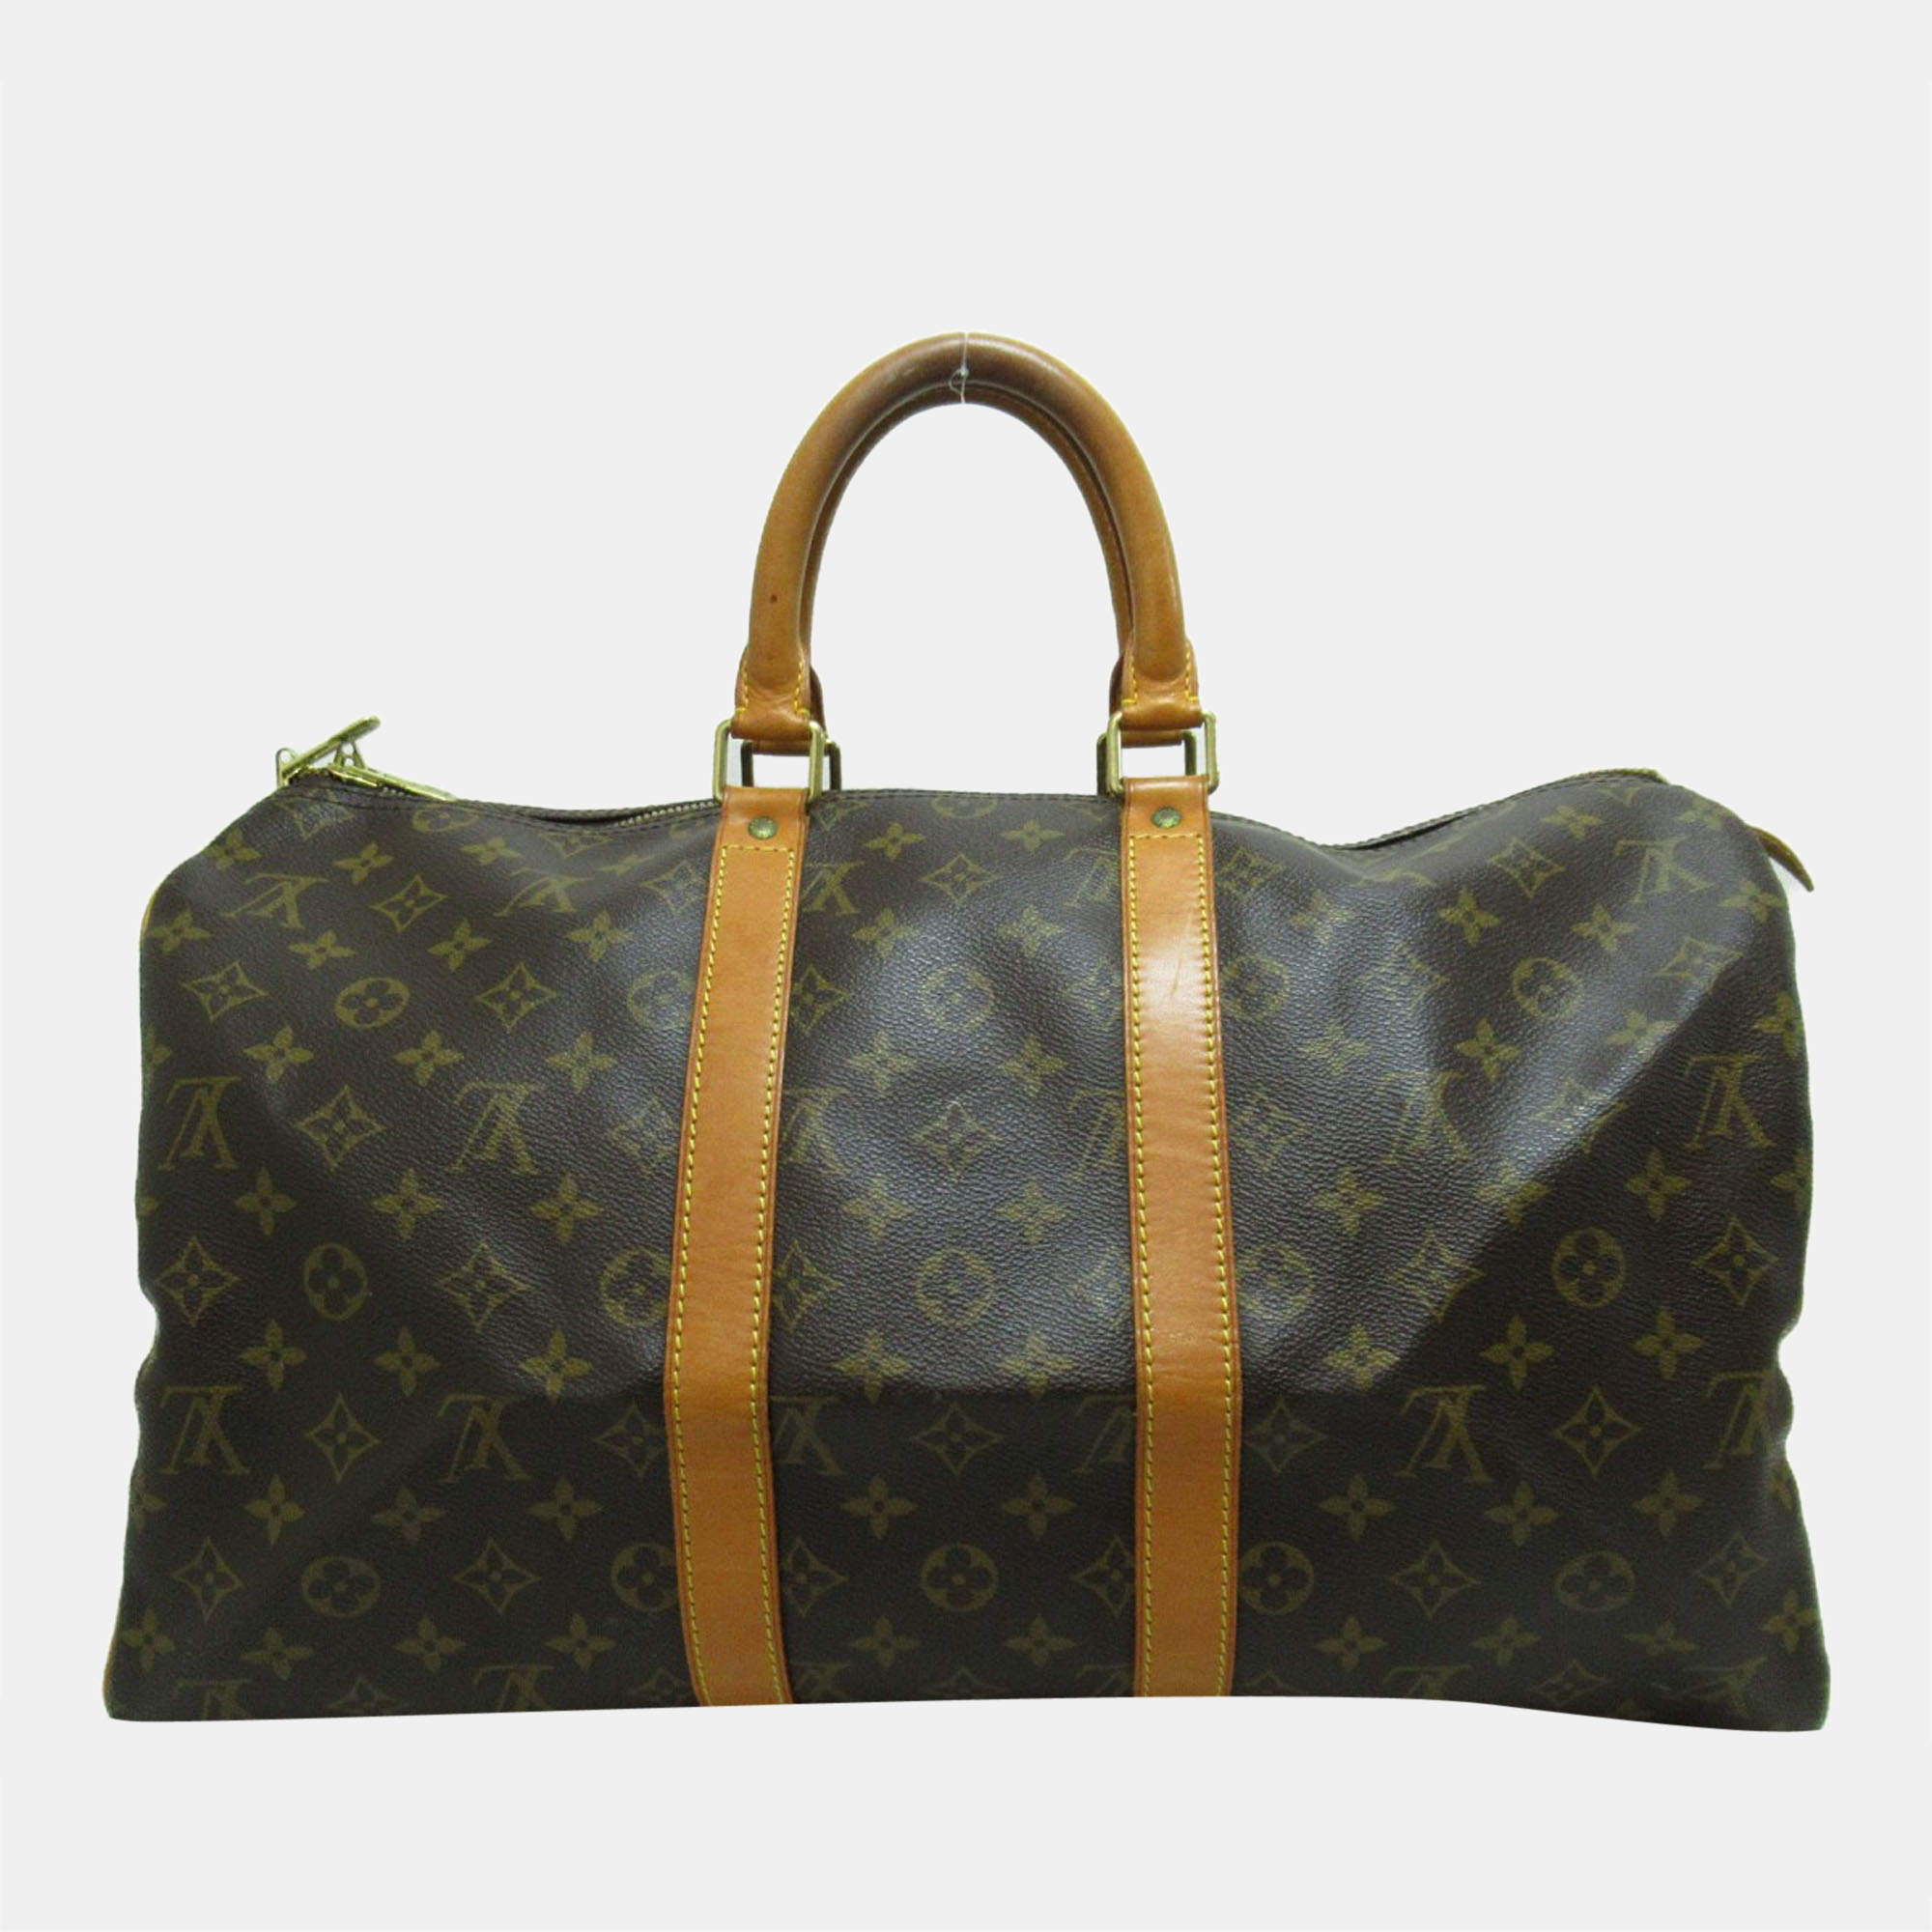 Louis Vuitton Small Duffel Bag